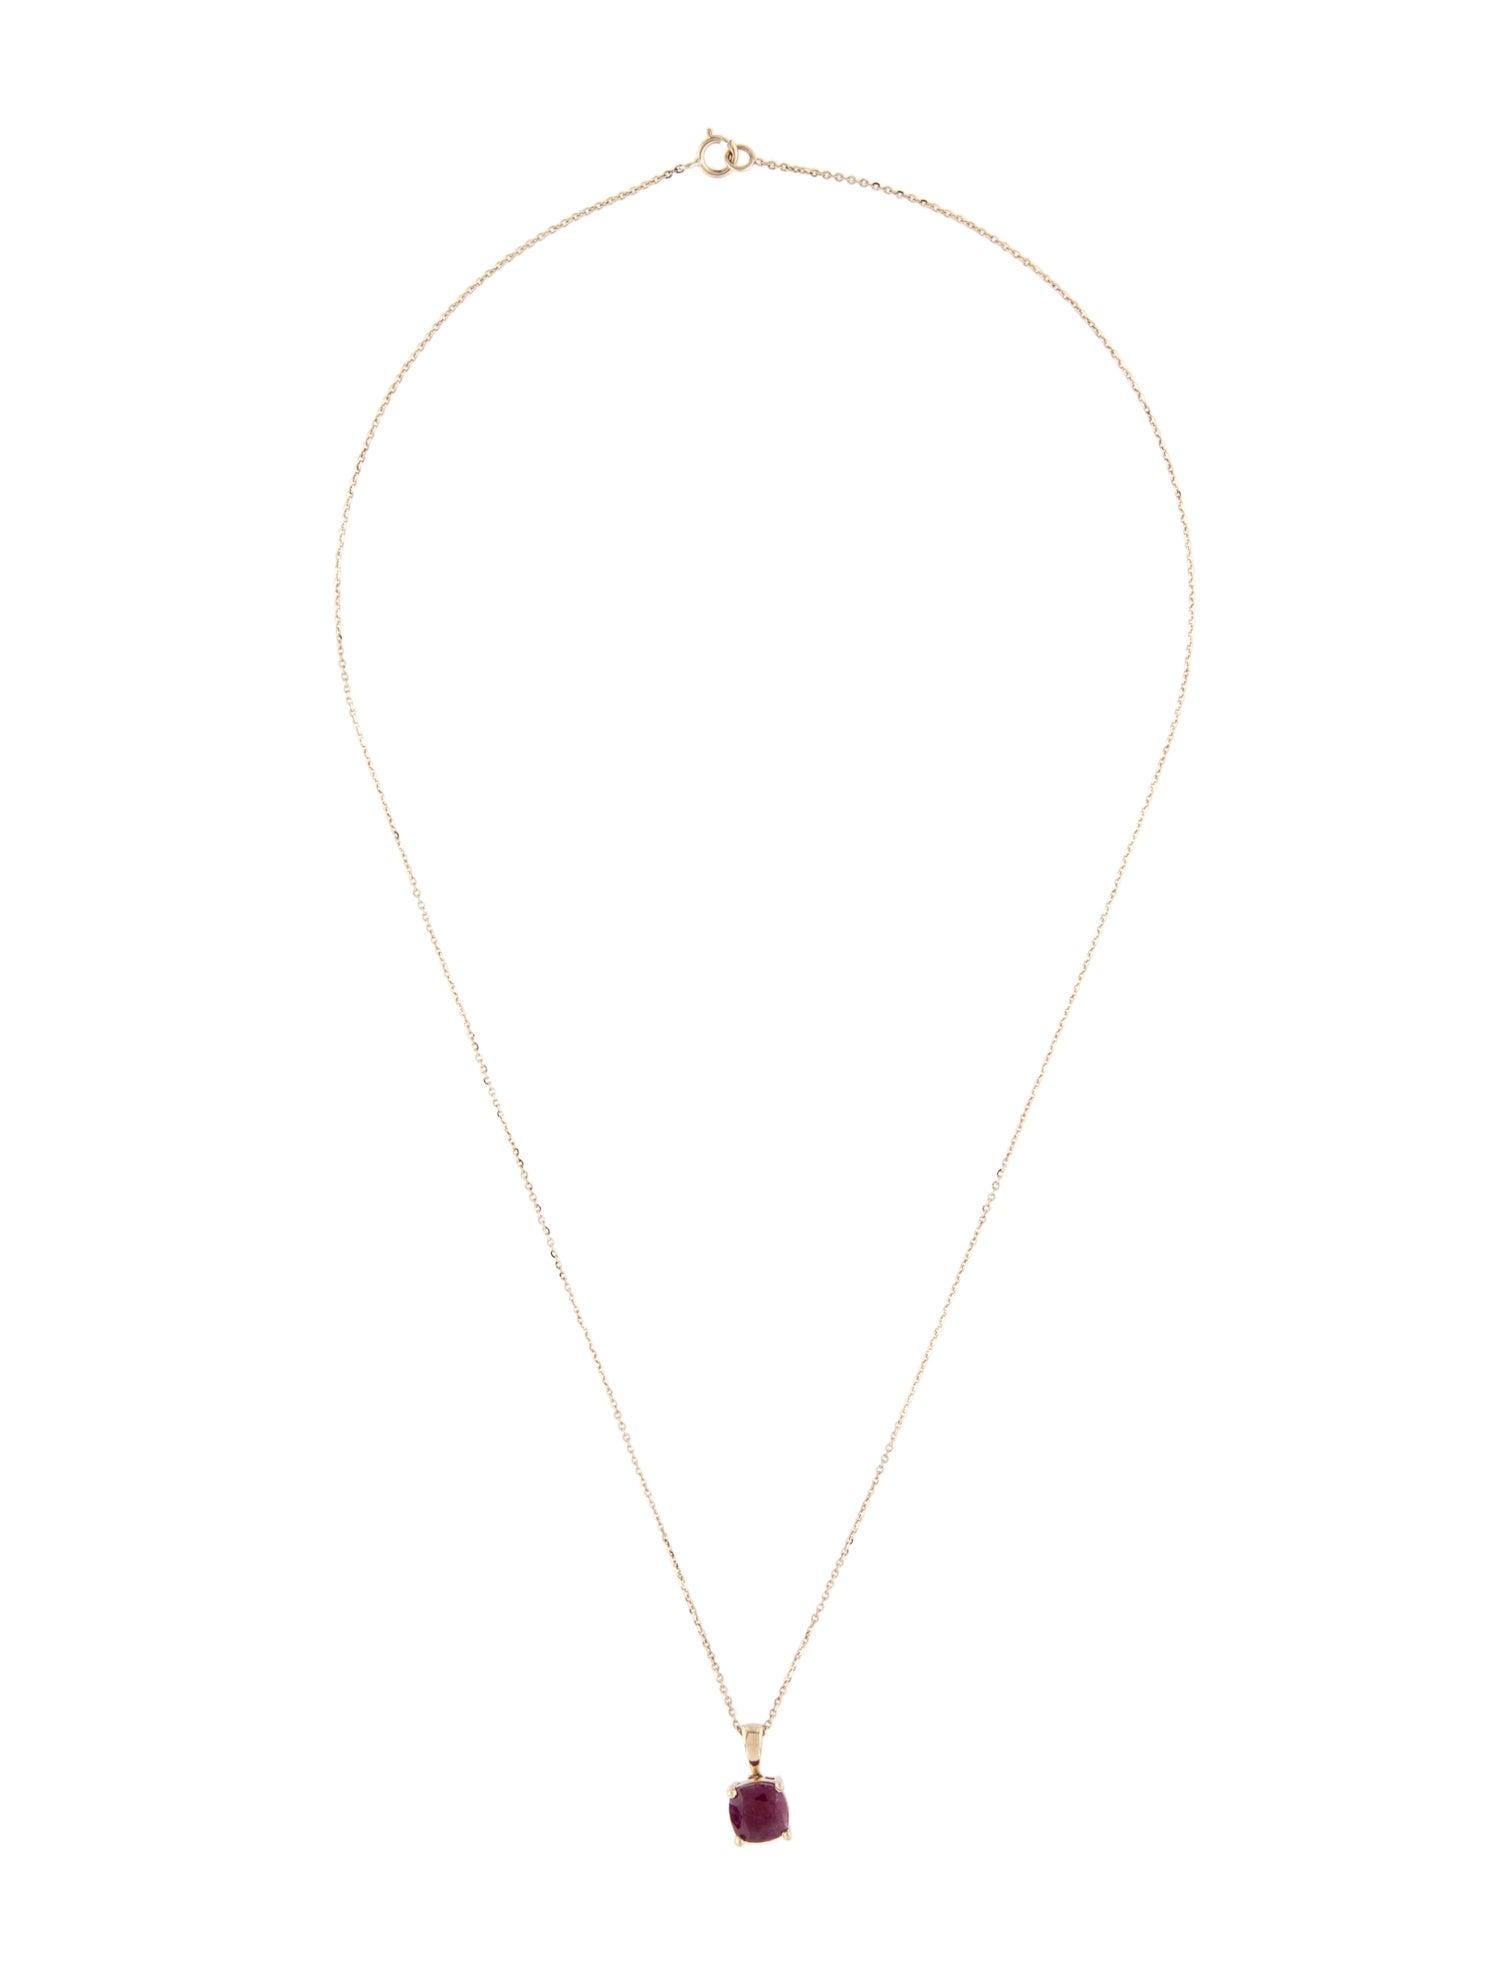 Brilliant Cut Gorgeous 14K Ruby Pendant Necklace  2.08ct Sparkling Gemstone Statement Piece For Sale